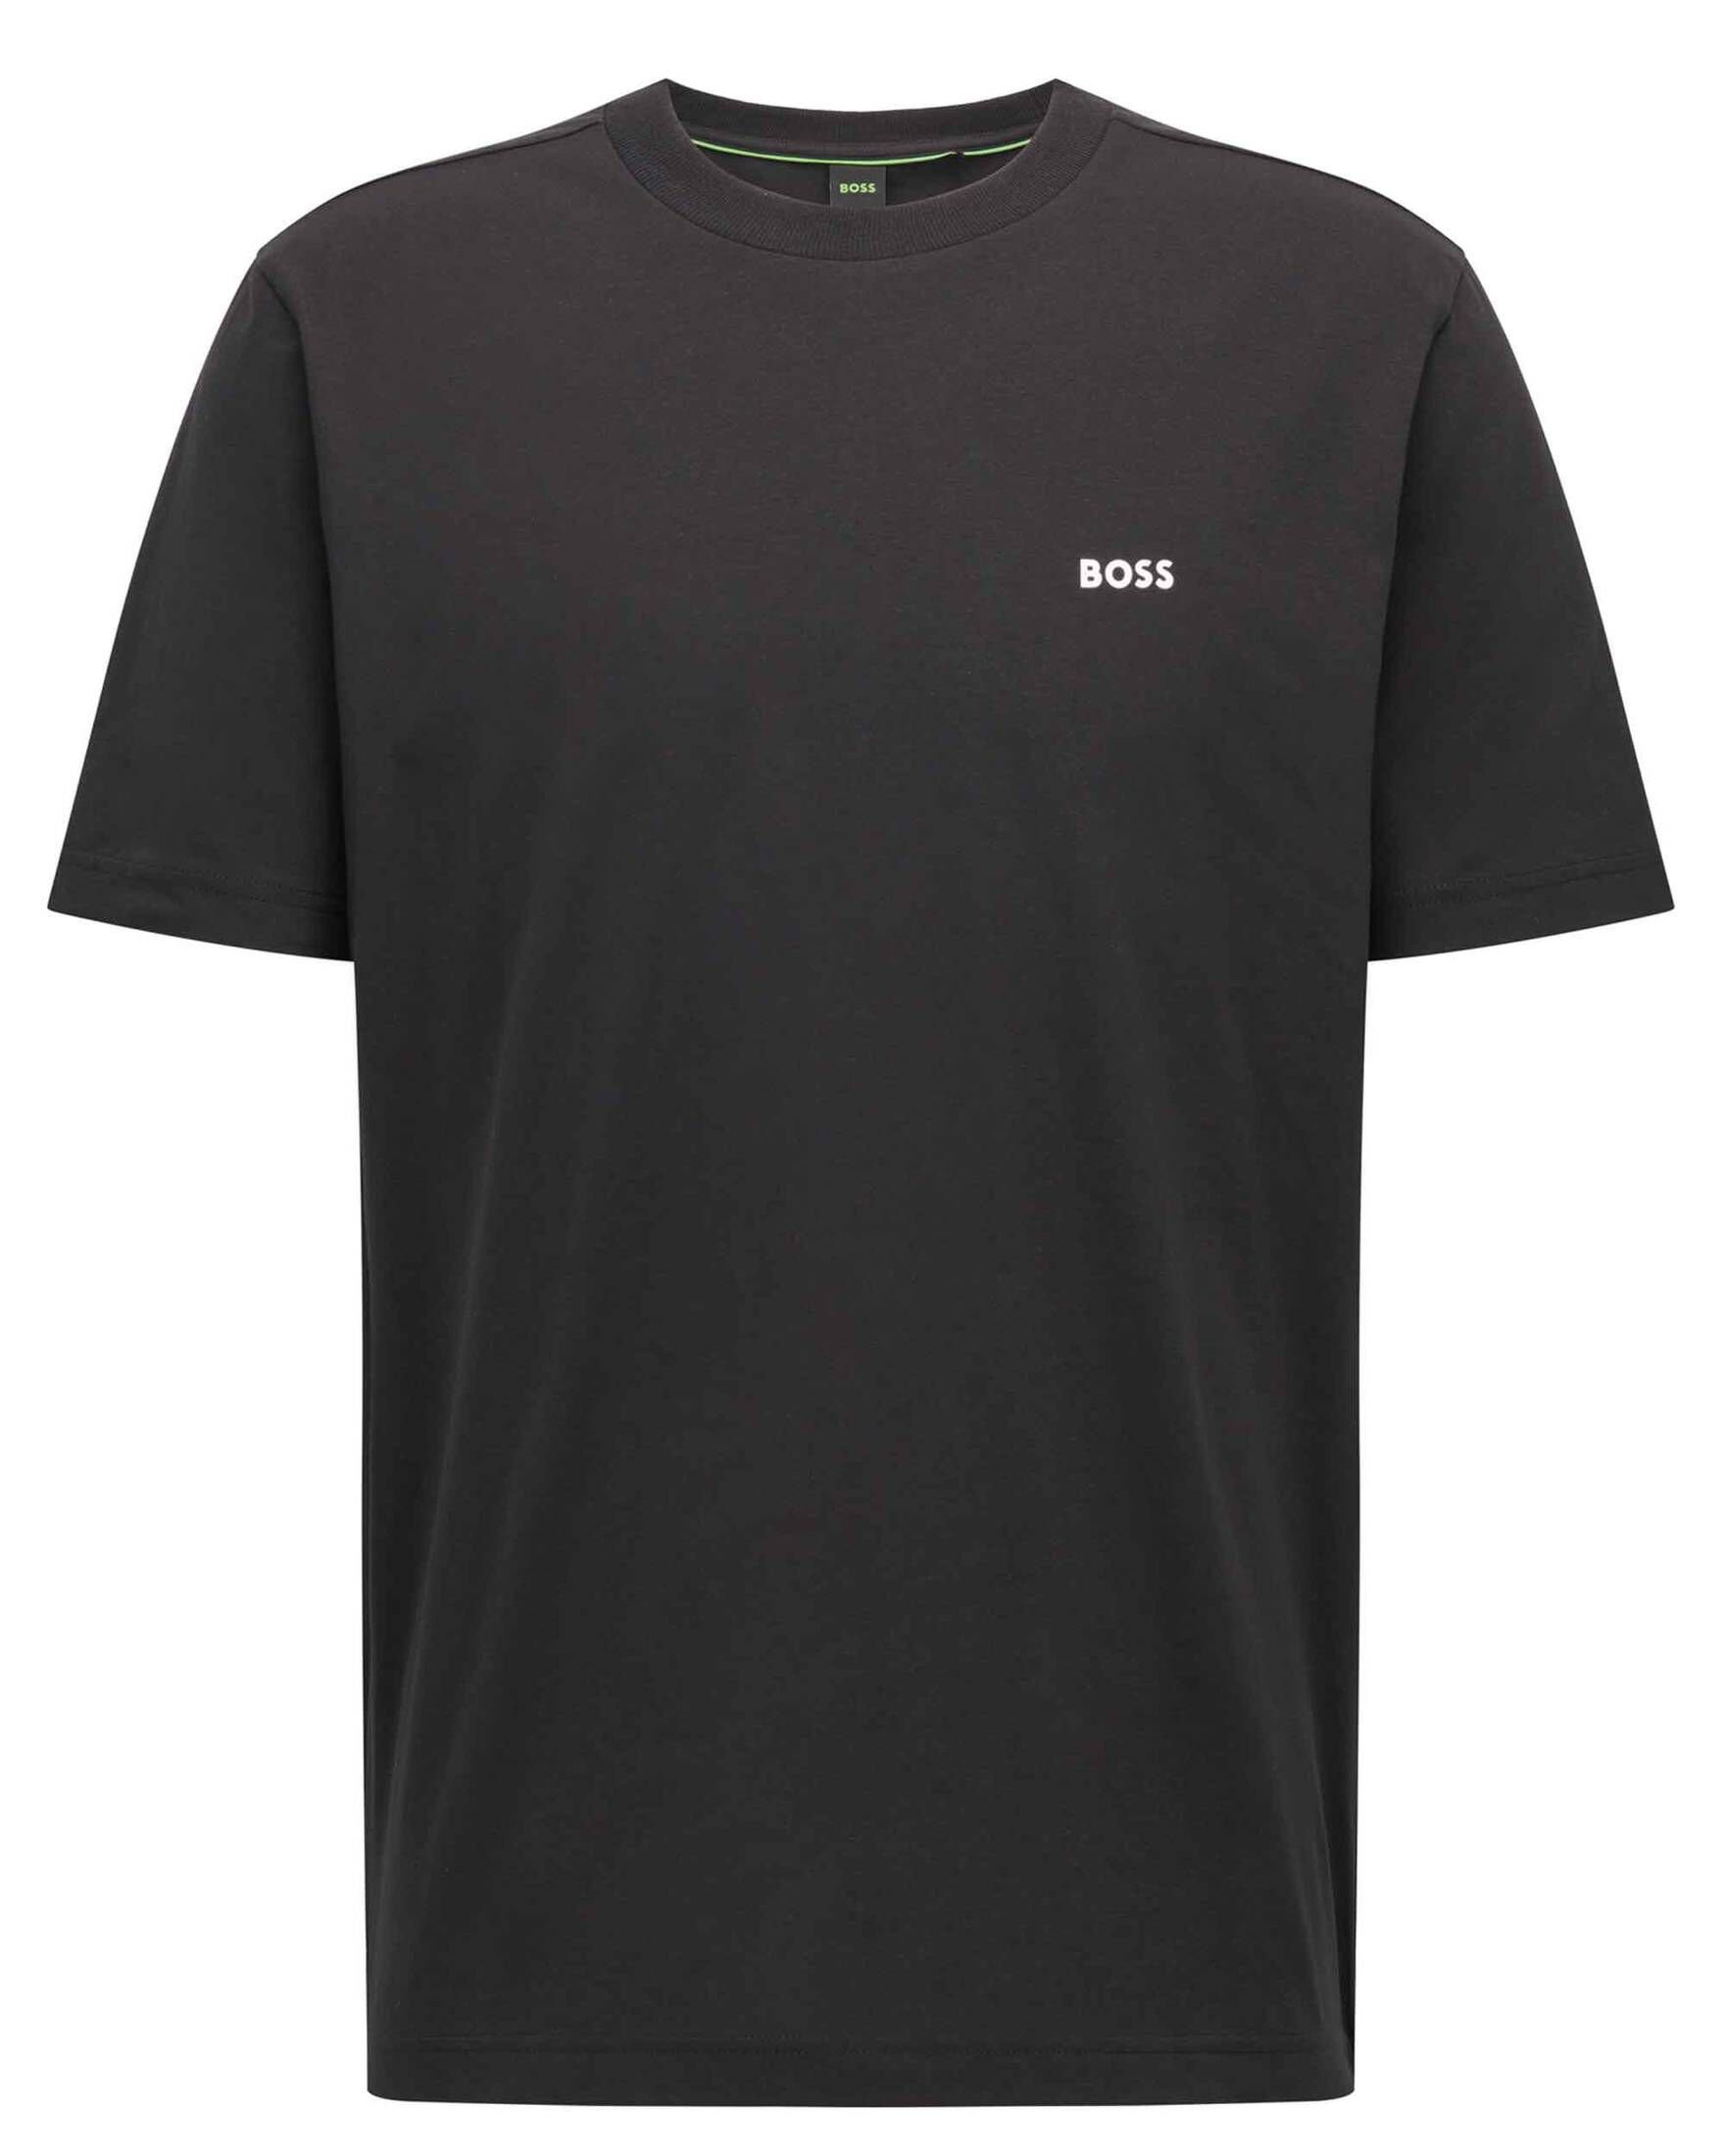 HUGO BOSS Herren T-Shirt online kaufen | OTTO